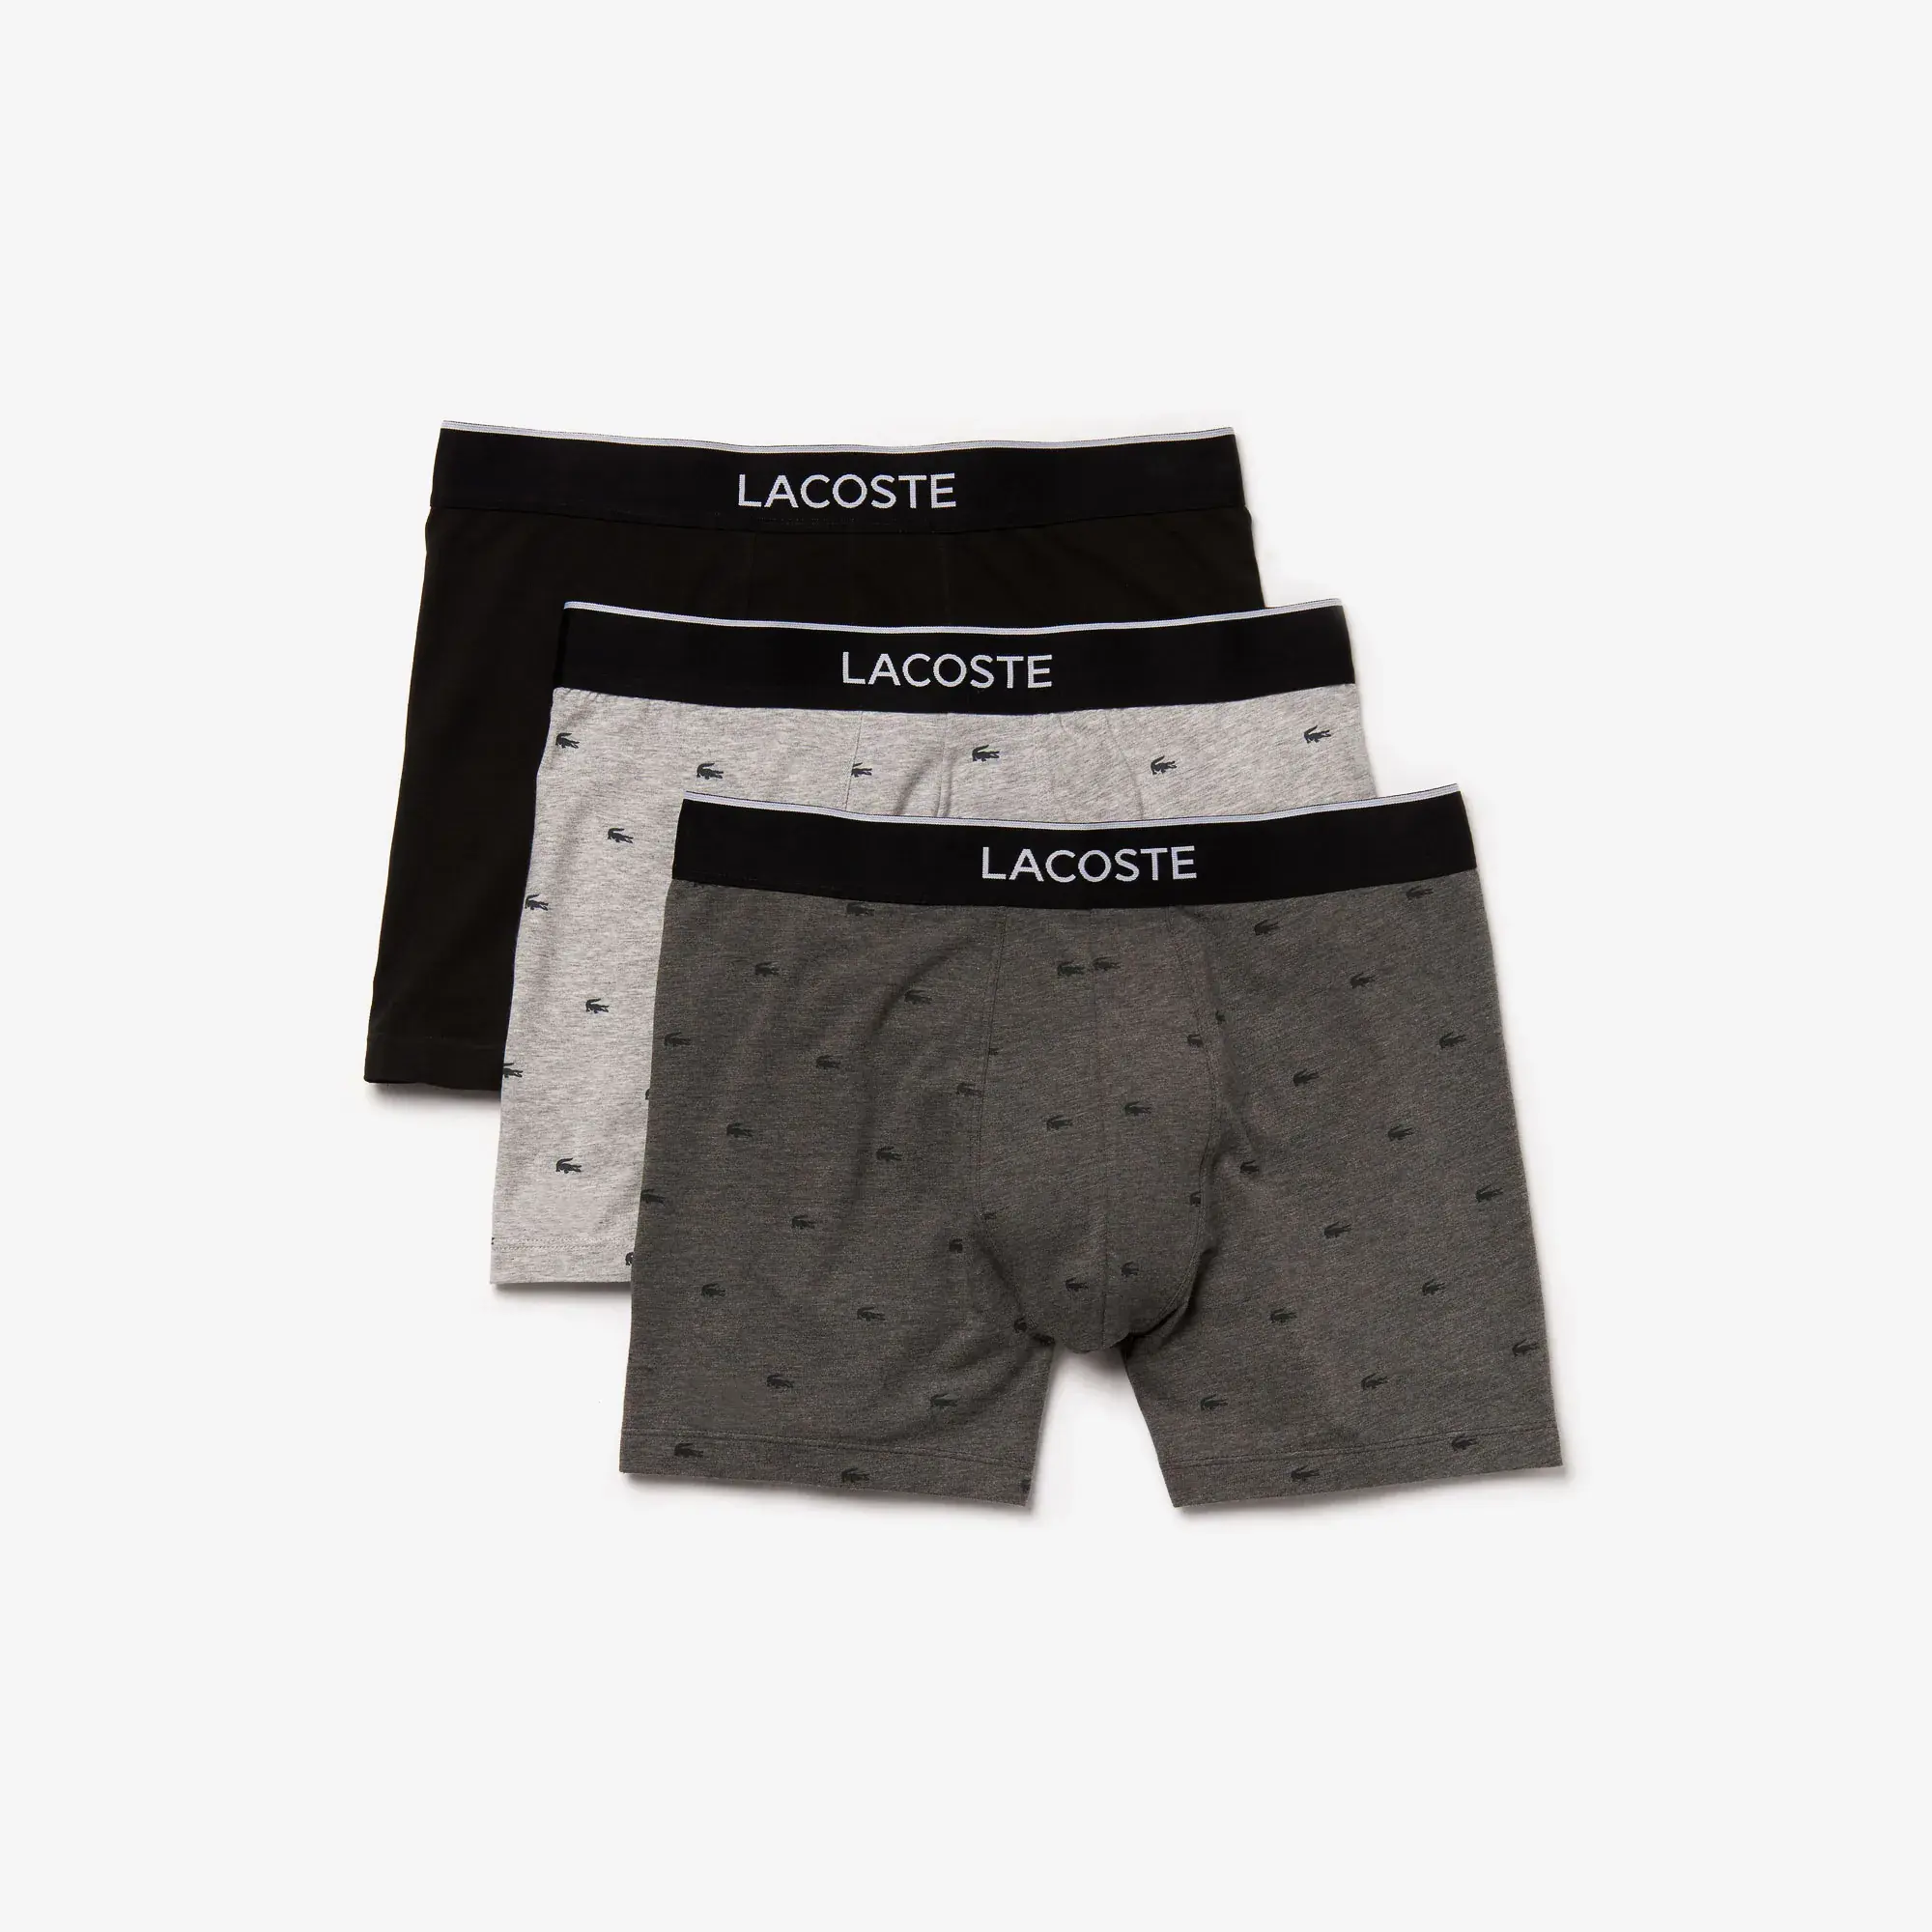 Lacoste Men’s Branded Waist Long Stretch Cotton Boxer Brief 3-Pack. 2